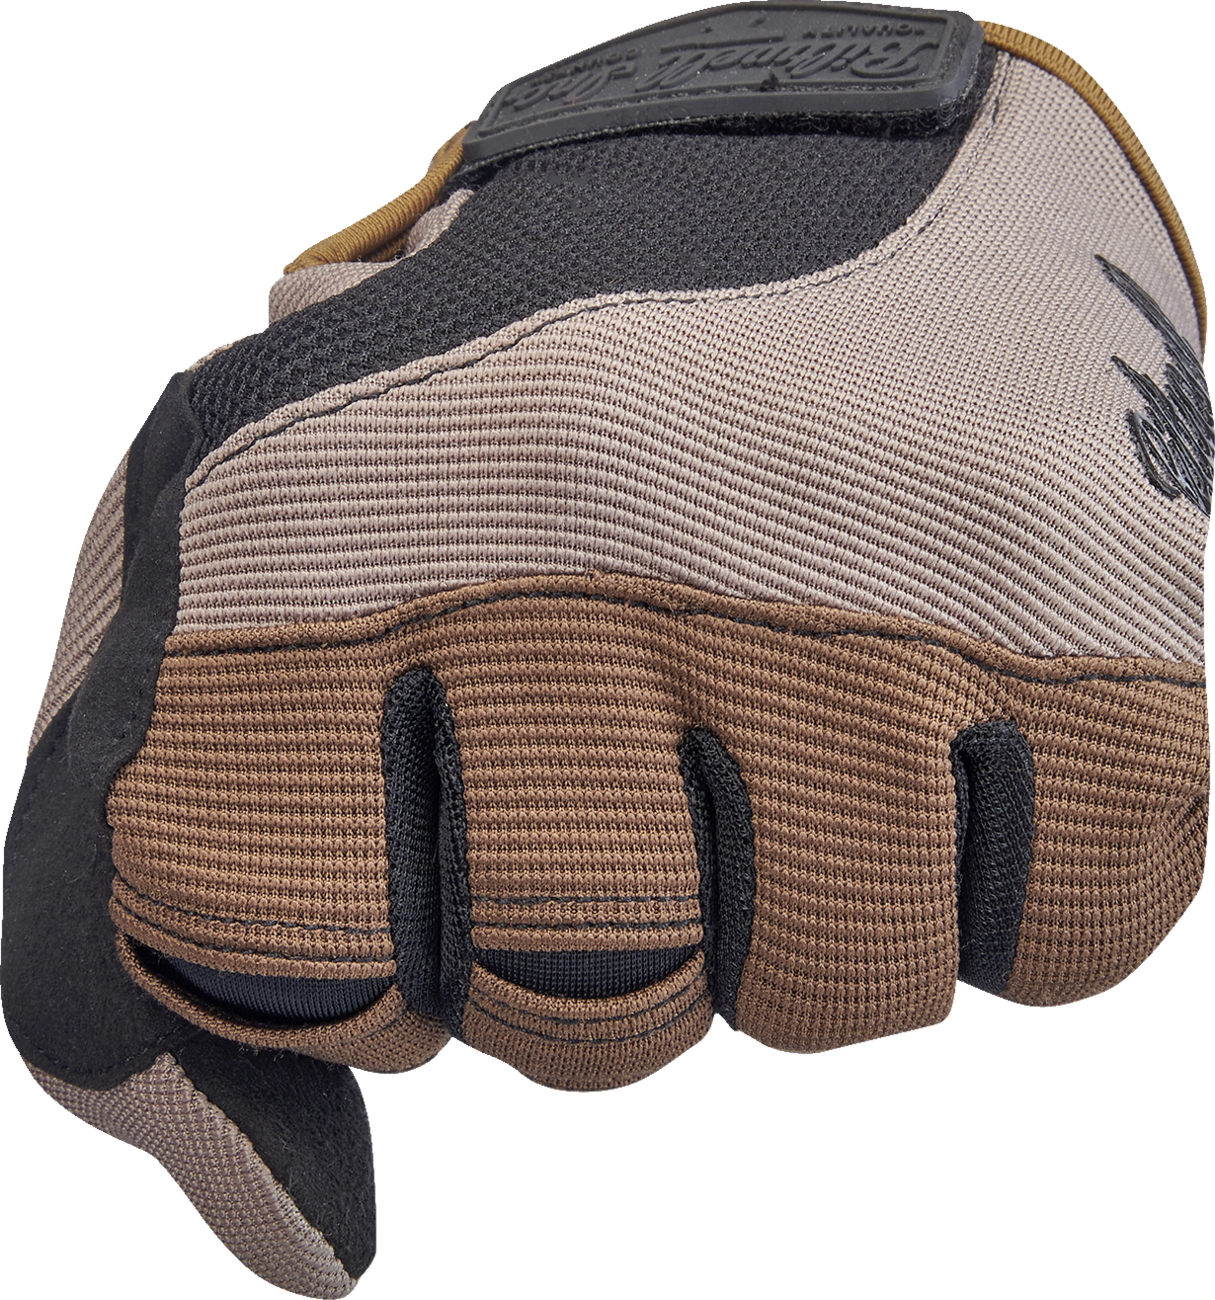 BILTWELL Moto Gloves - Coyote/Black - Small 1501-1301-002